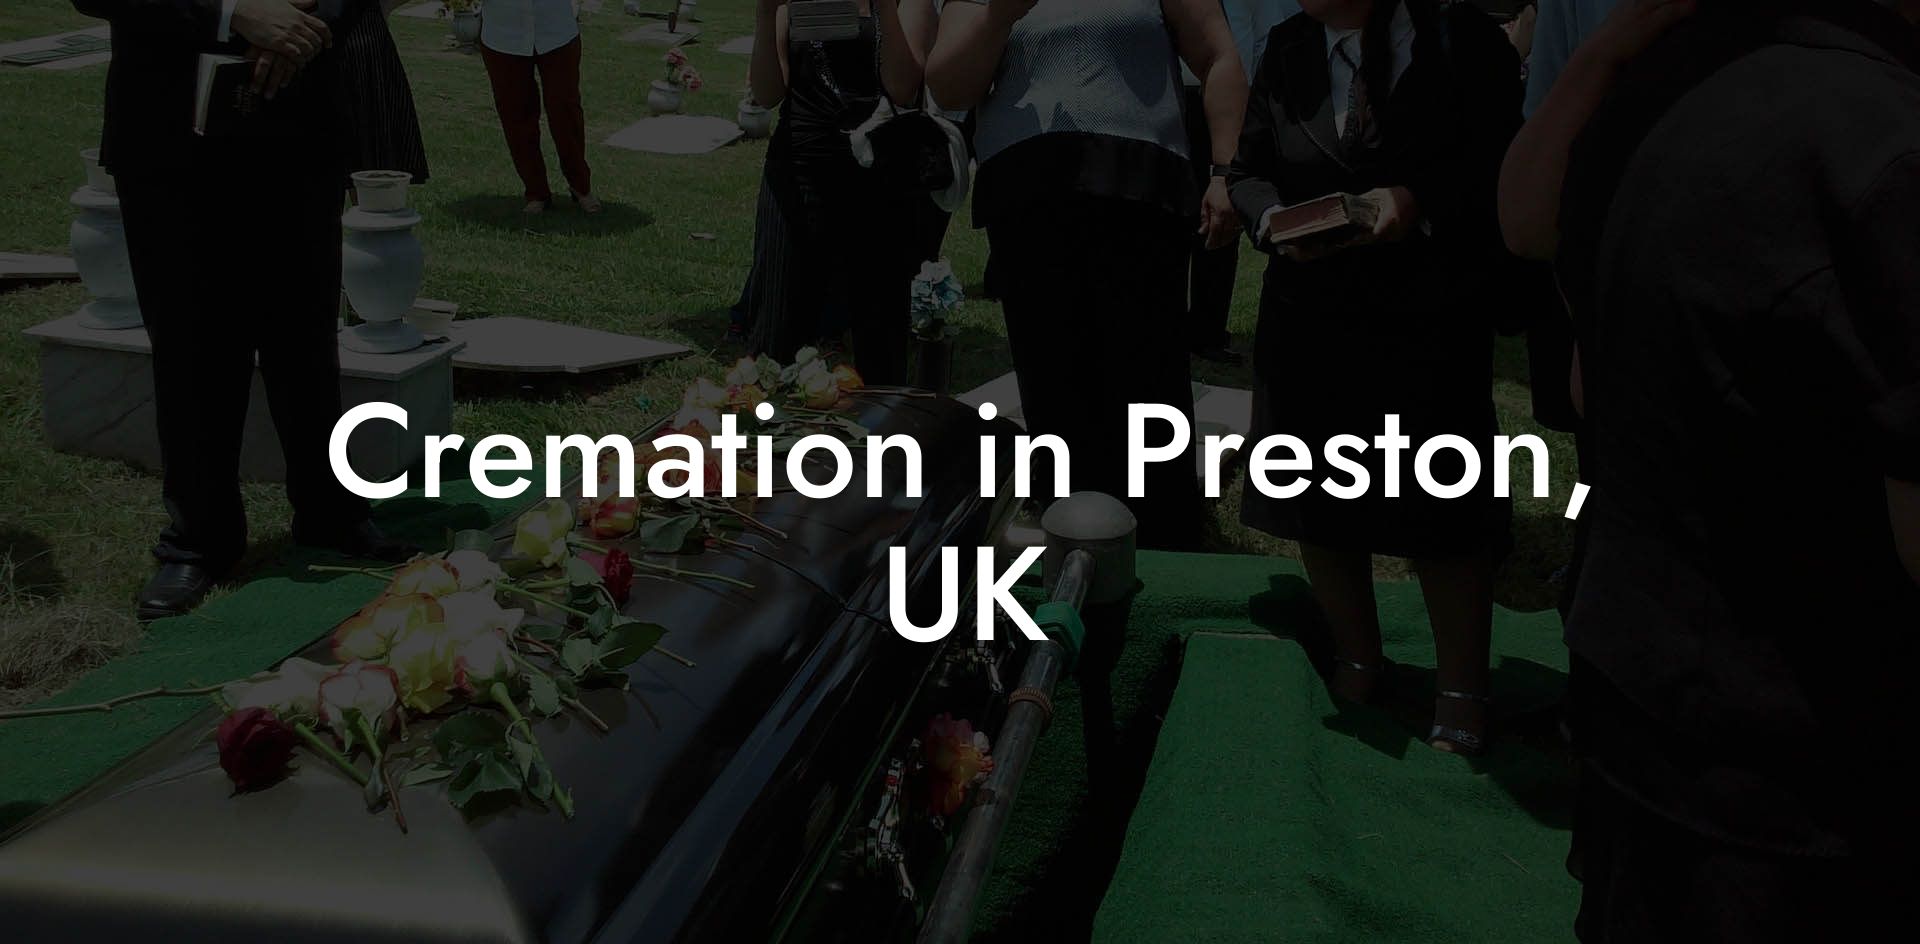 Cremation in Preston, UK